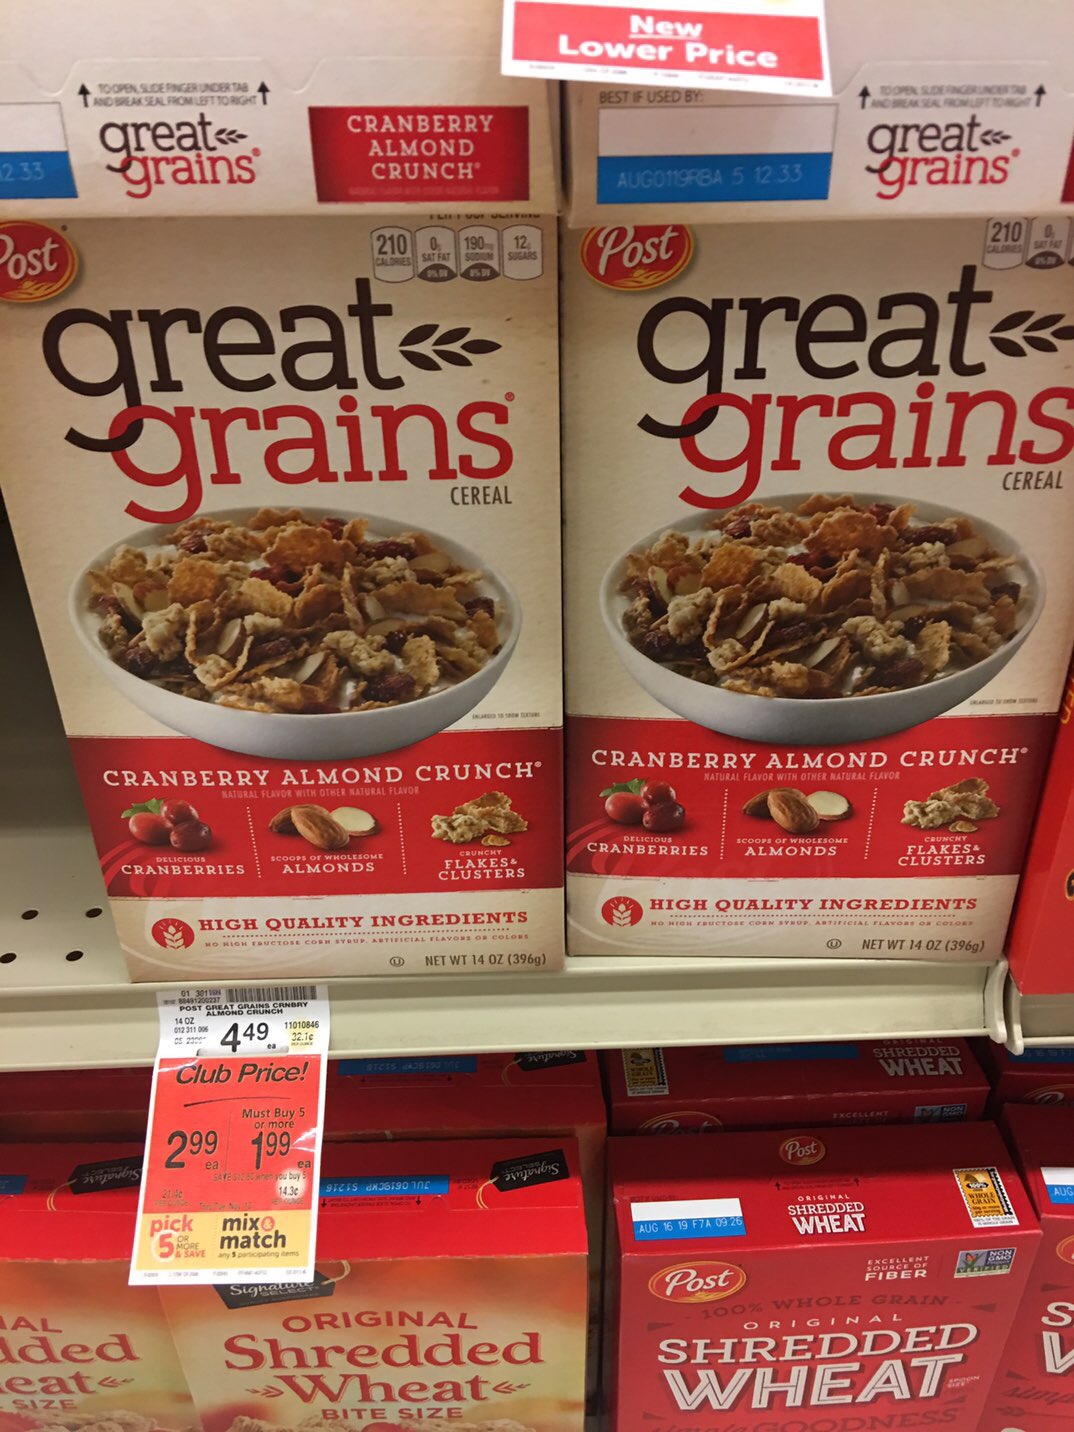 Post great grains sale